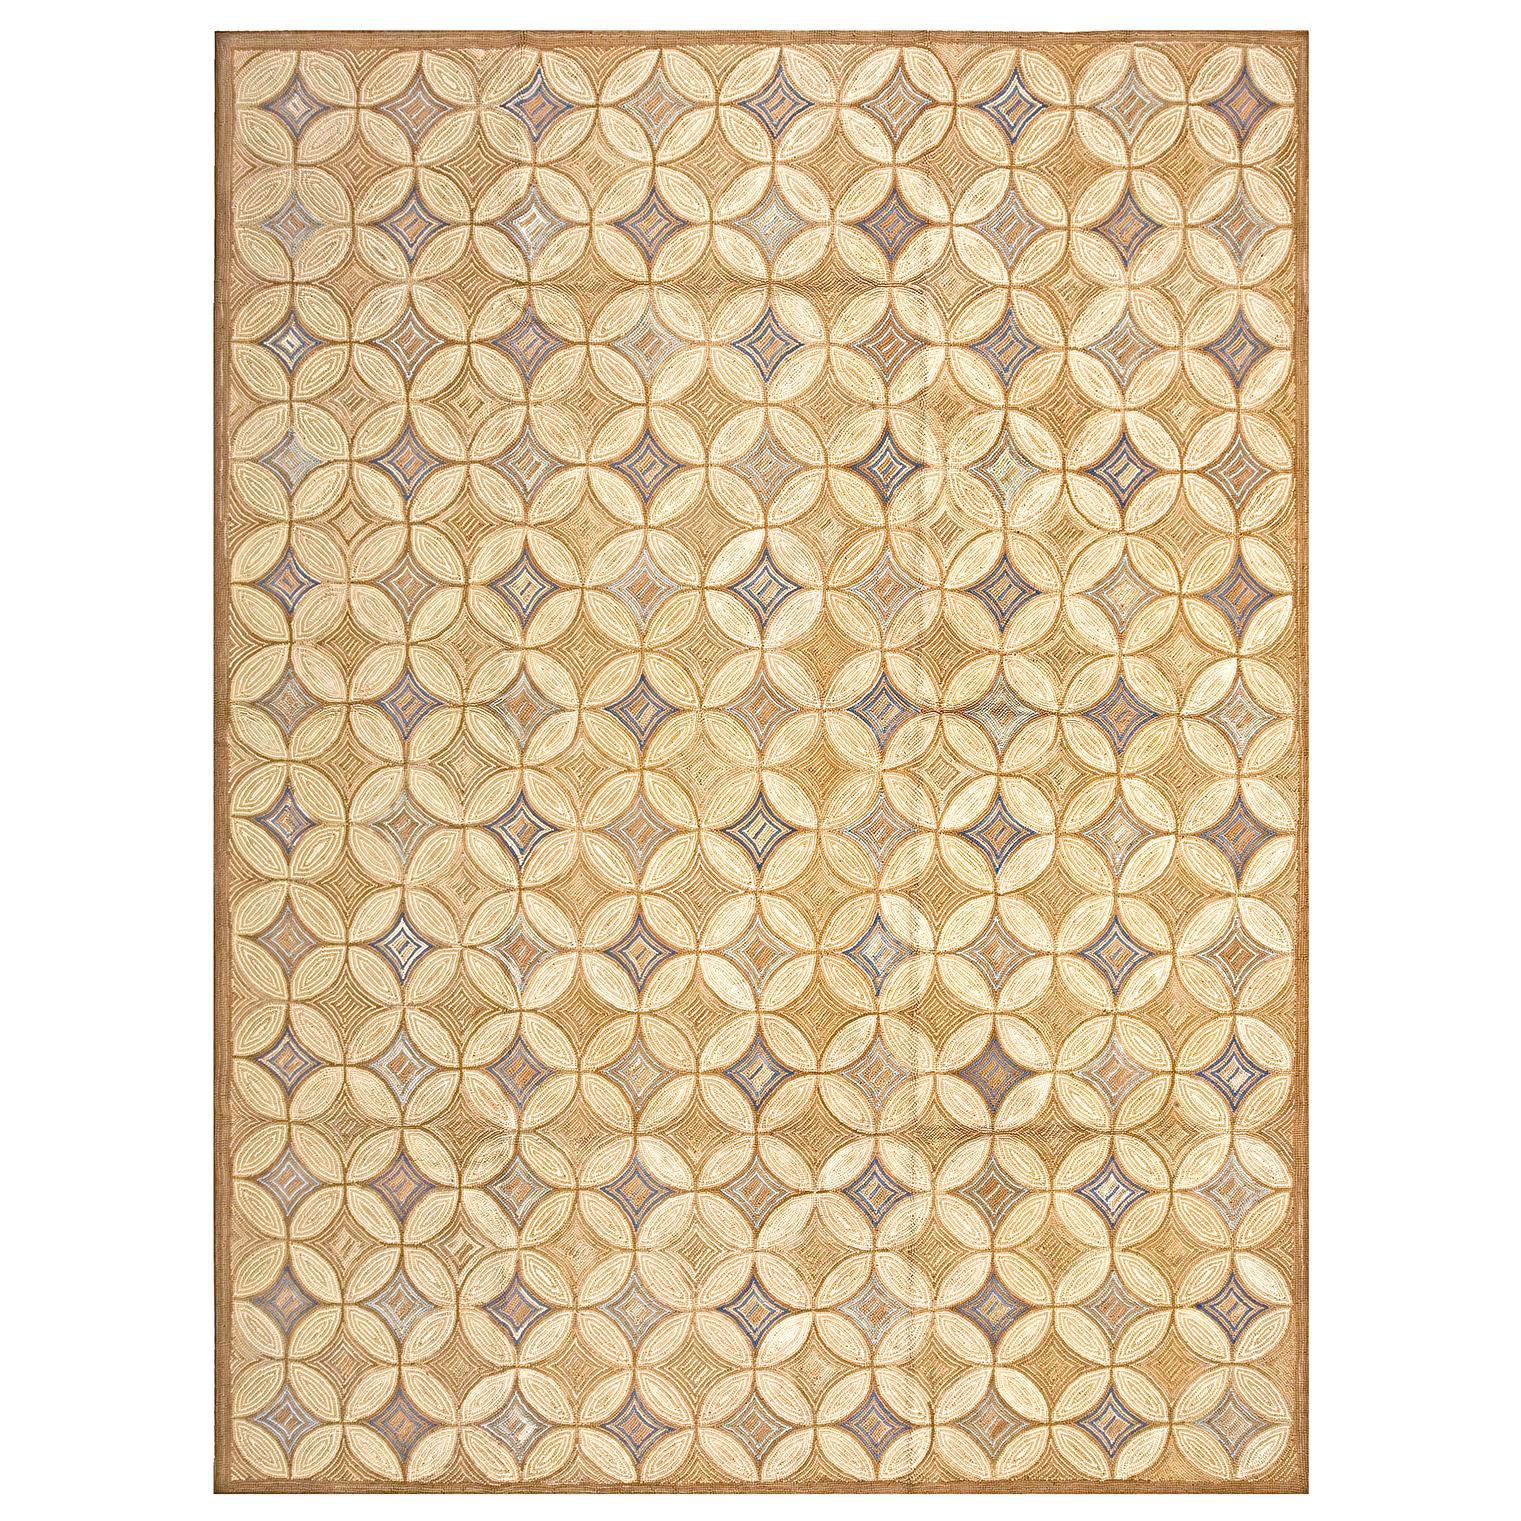 Contemporary Handmade Cotton Hooked Rug ( 8' x 10' - 244 x 305 cm )